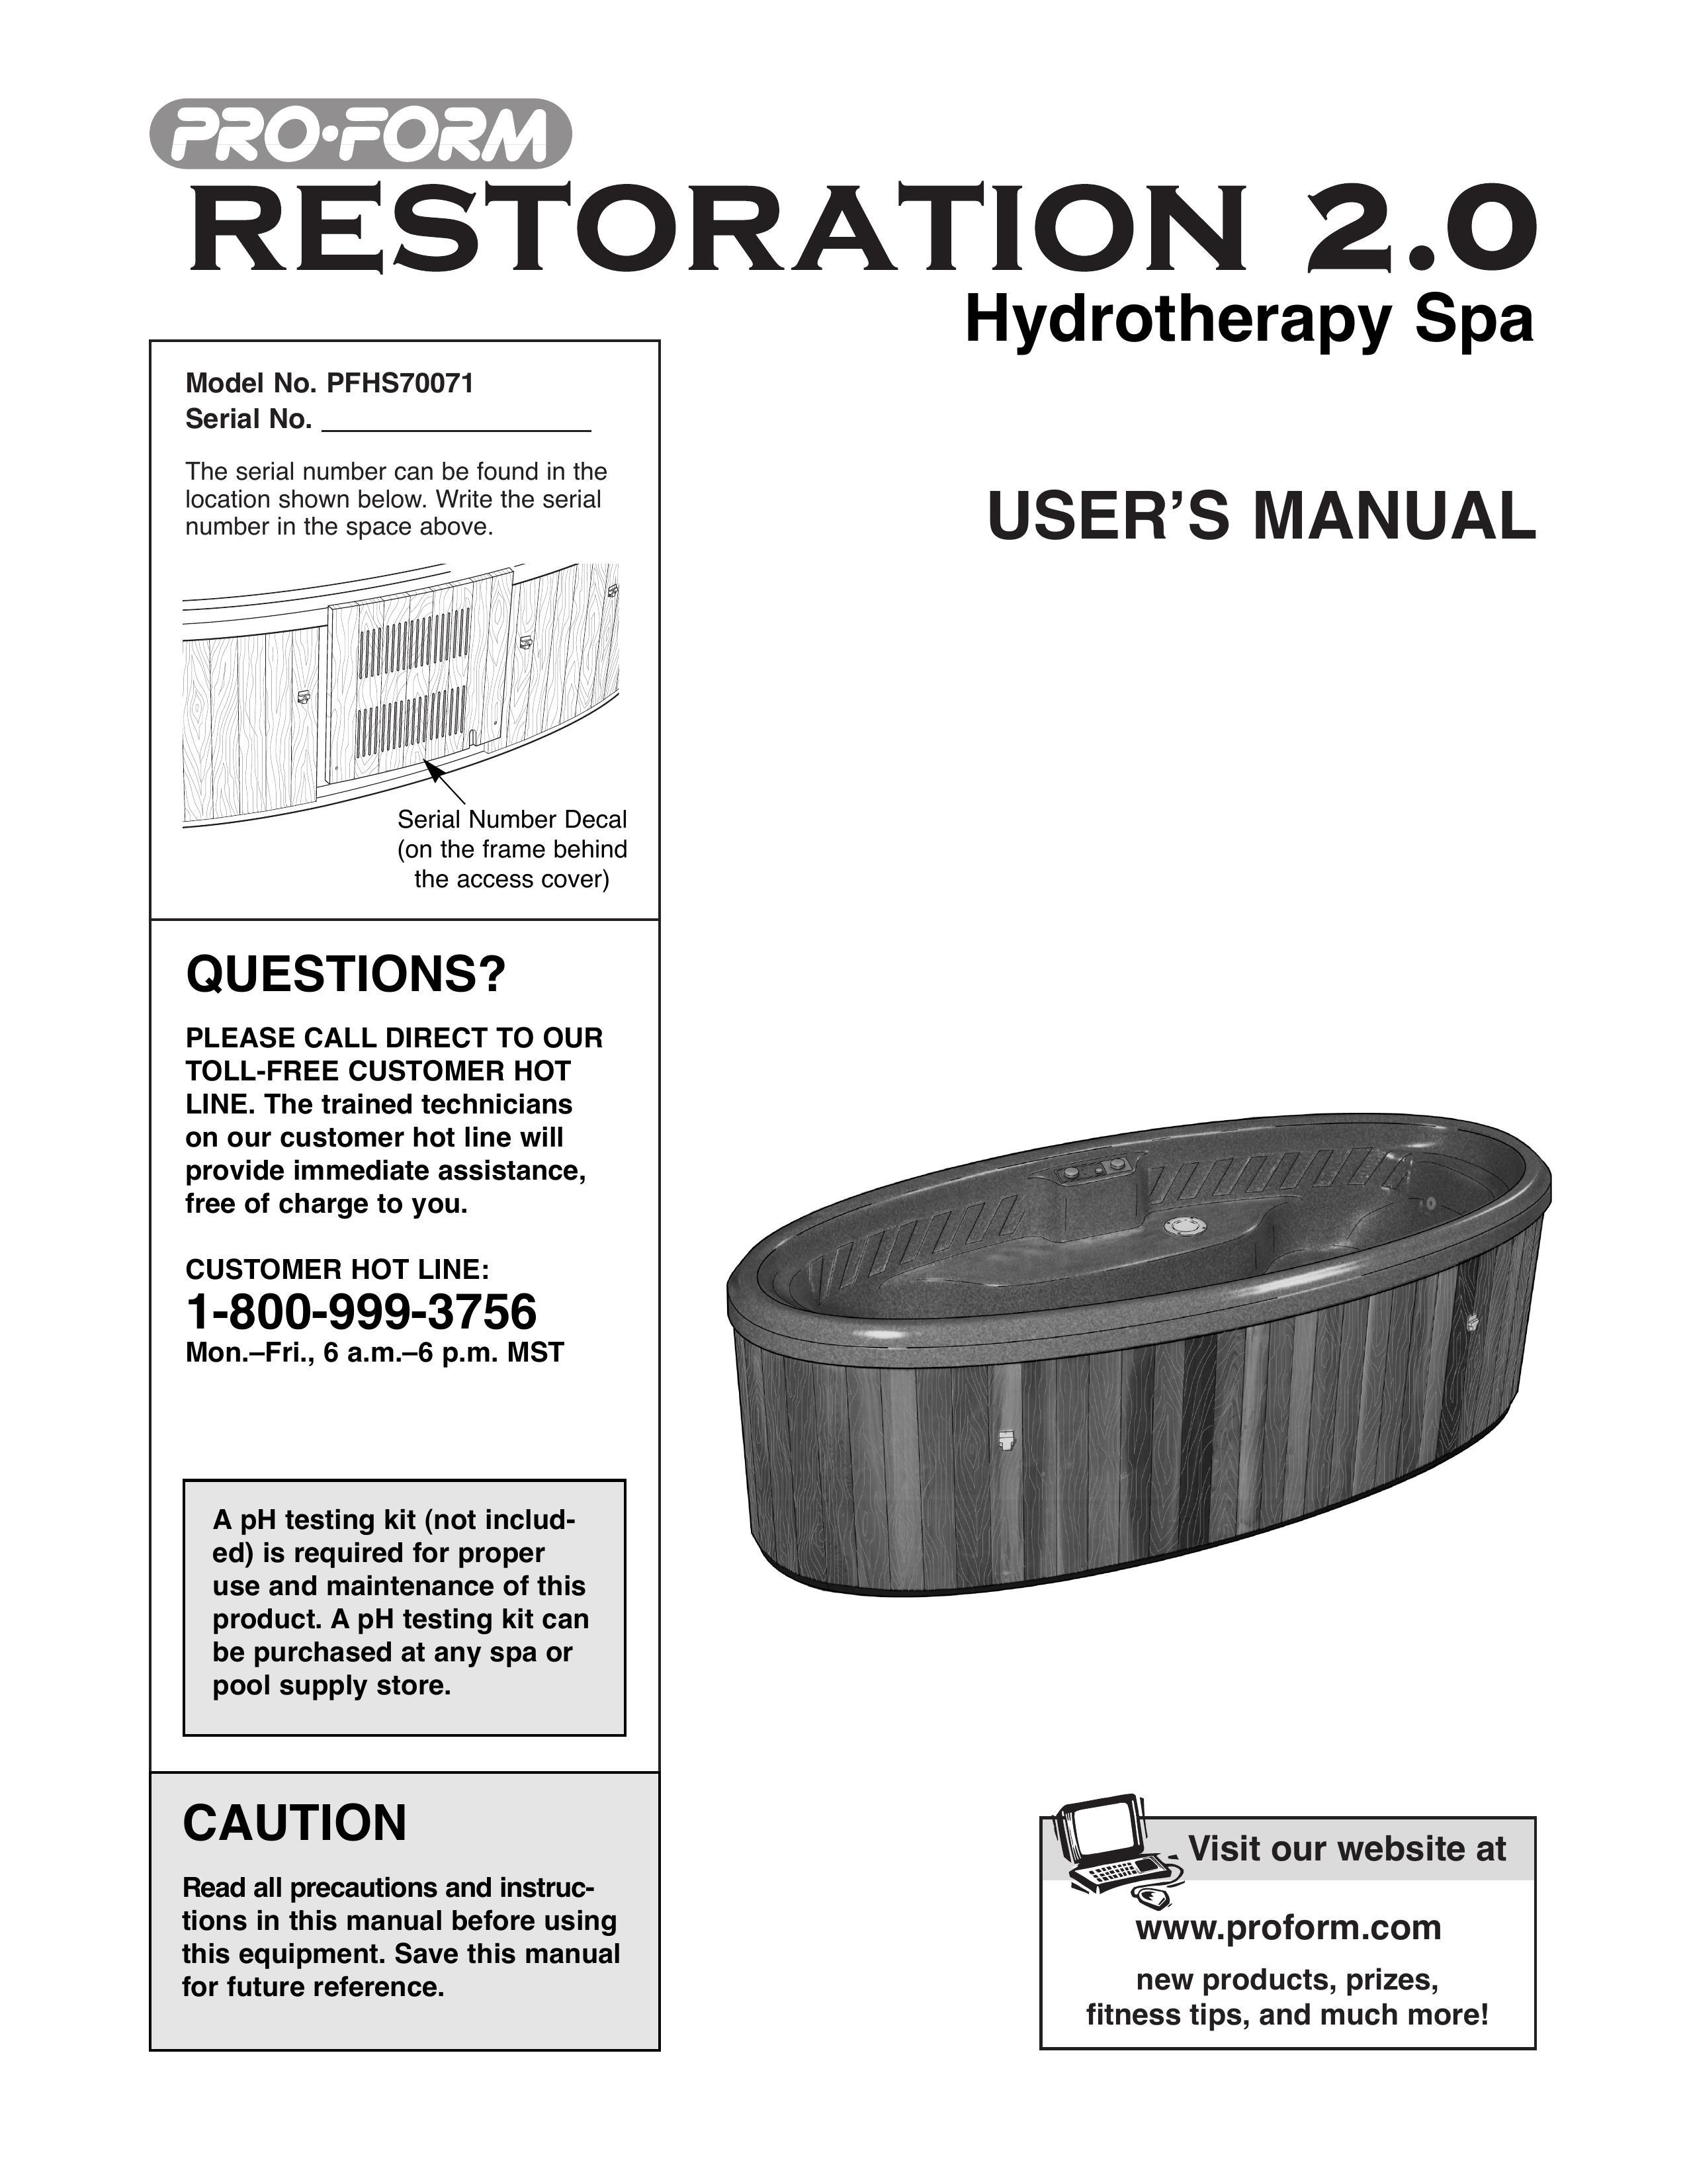 ProForm PFHS70071 Hot Tub User Manual